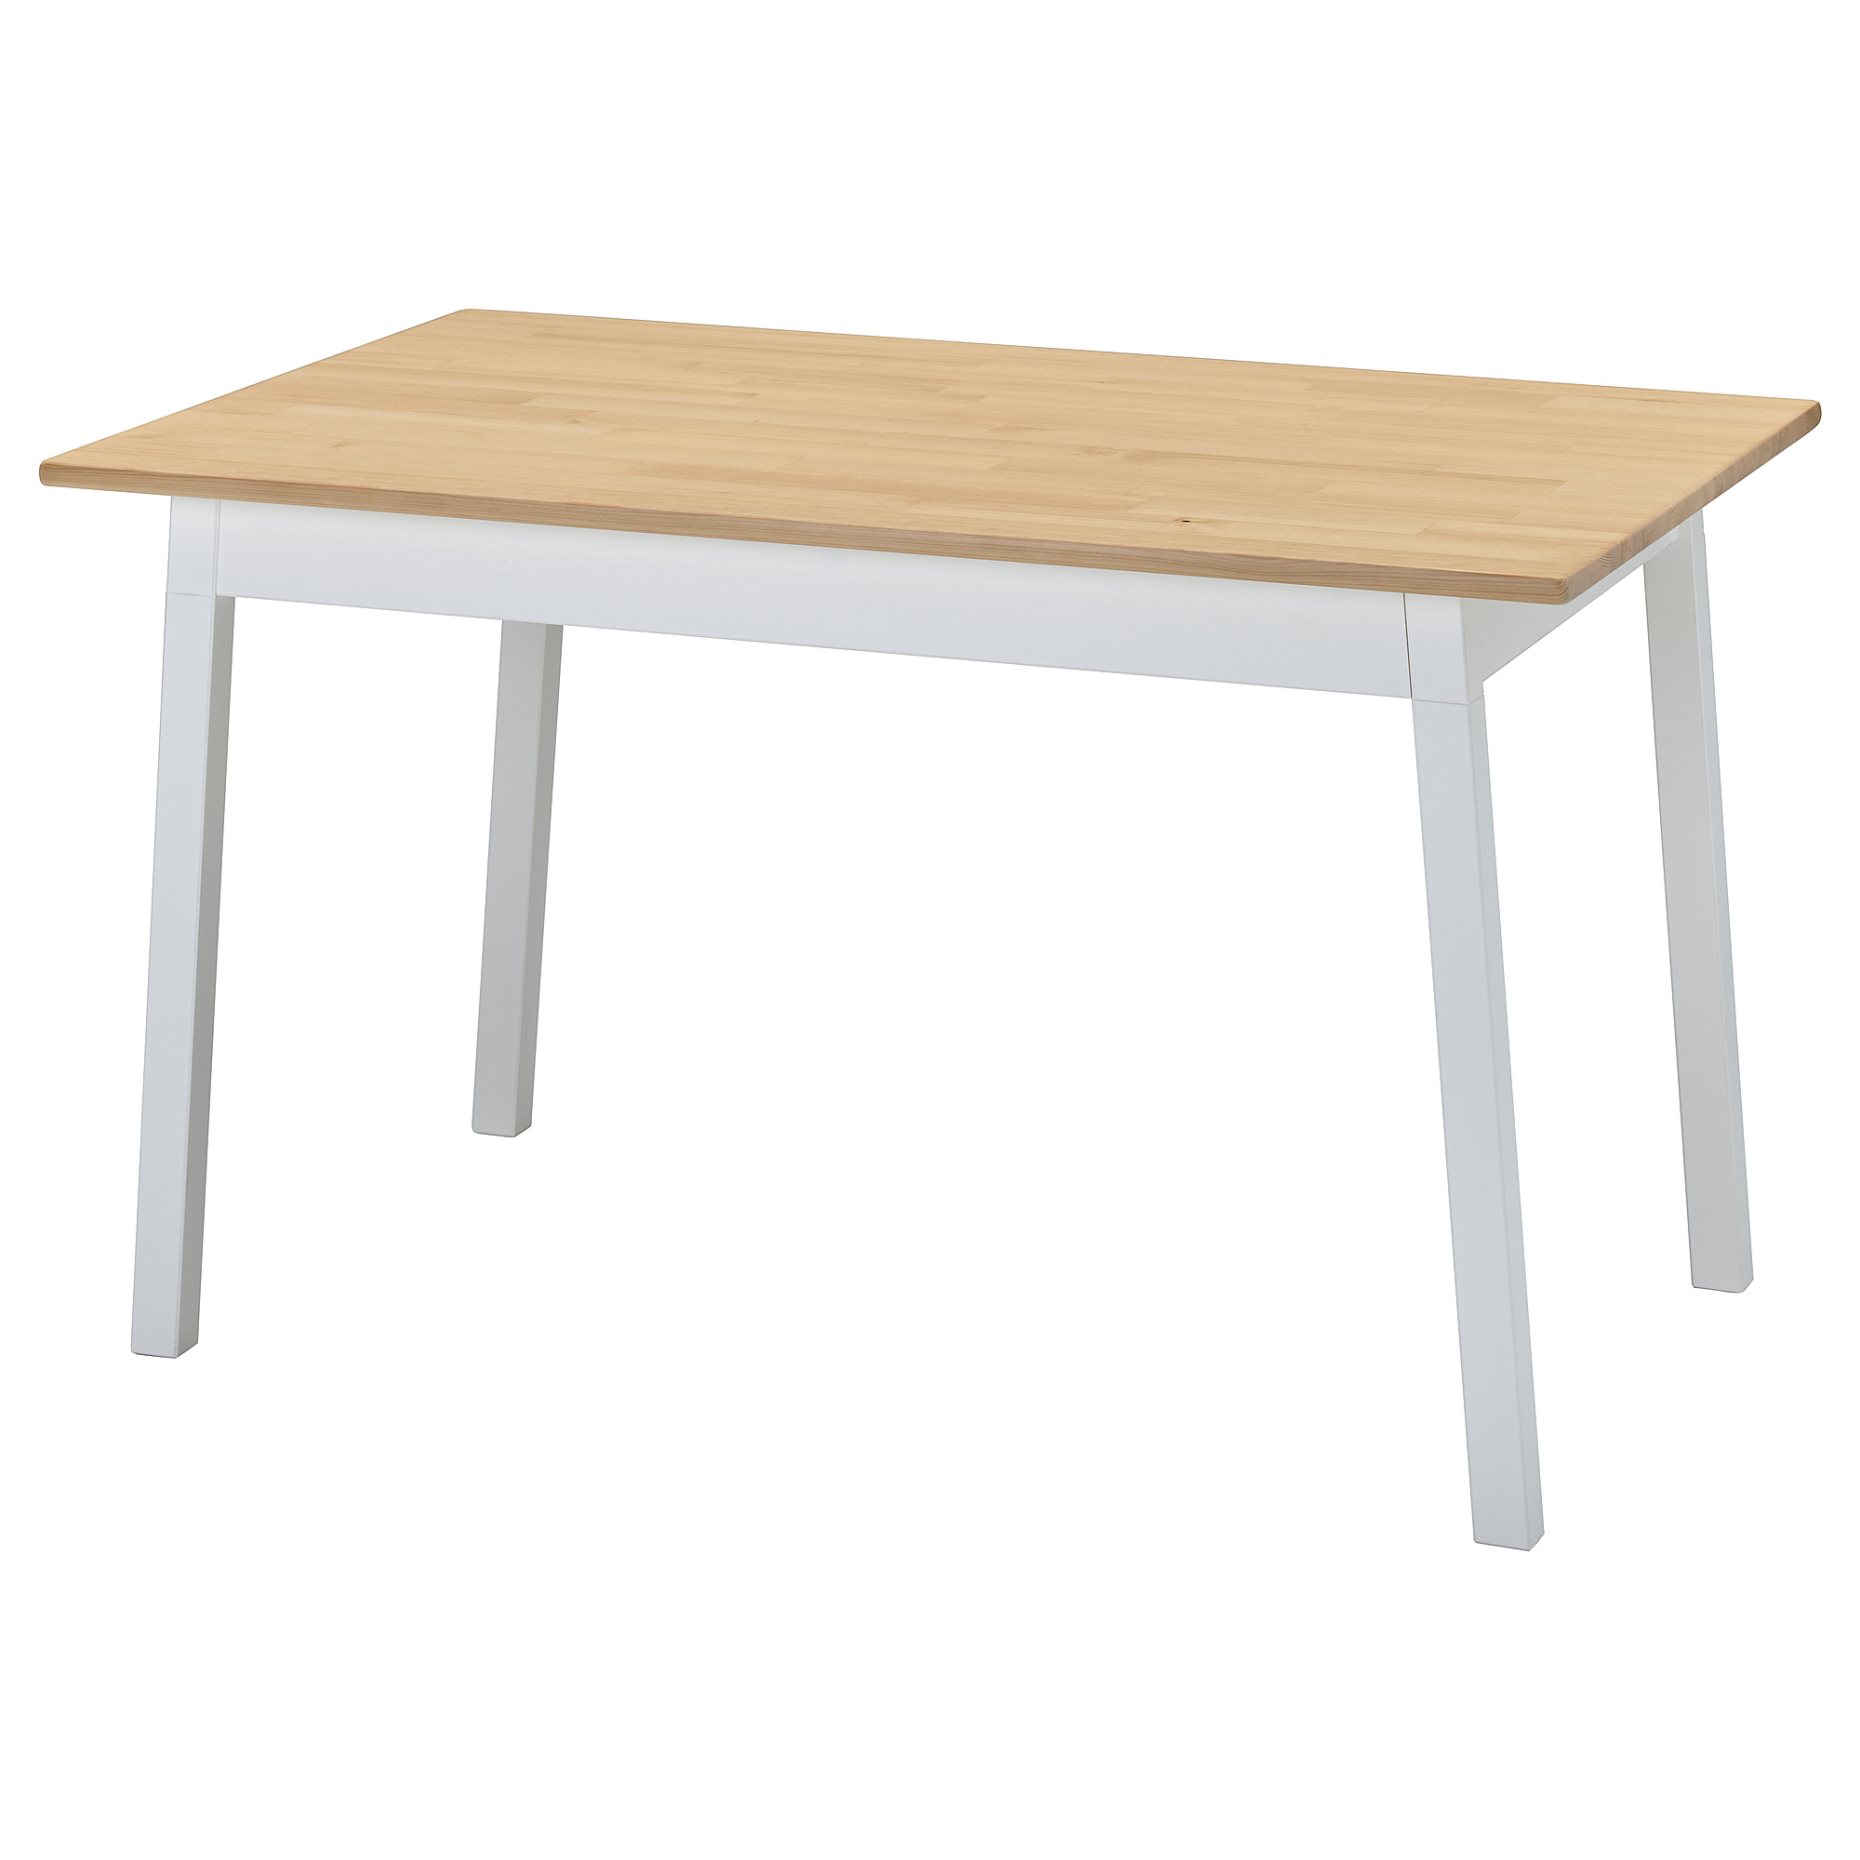 PINNTORP, τραπέζι, 125x75 cm, 305.294.67